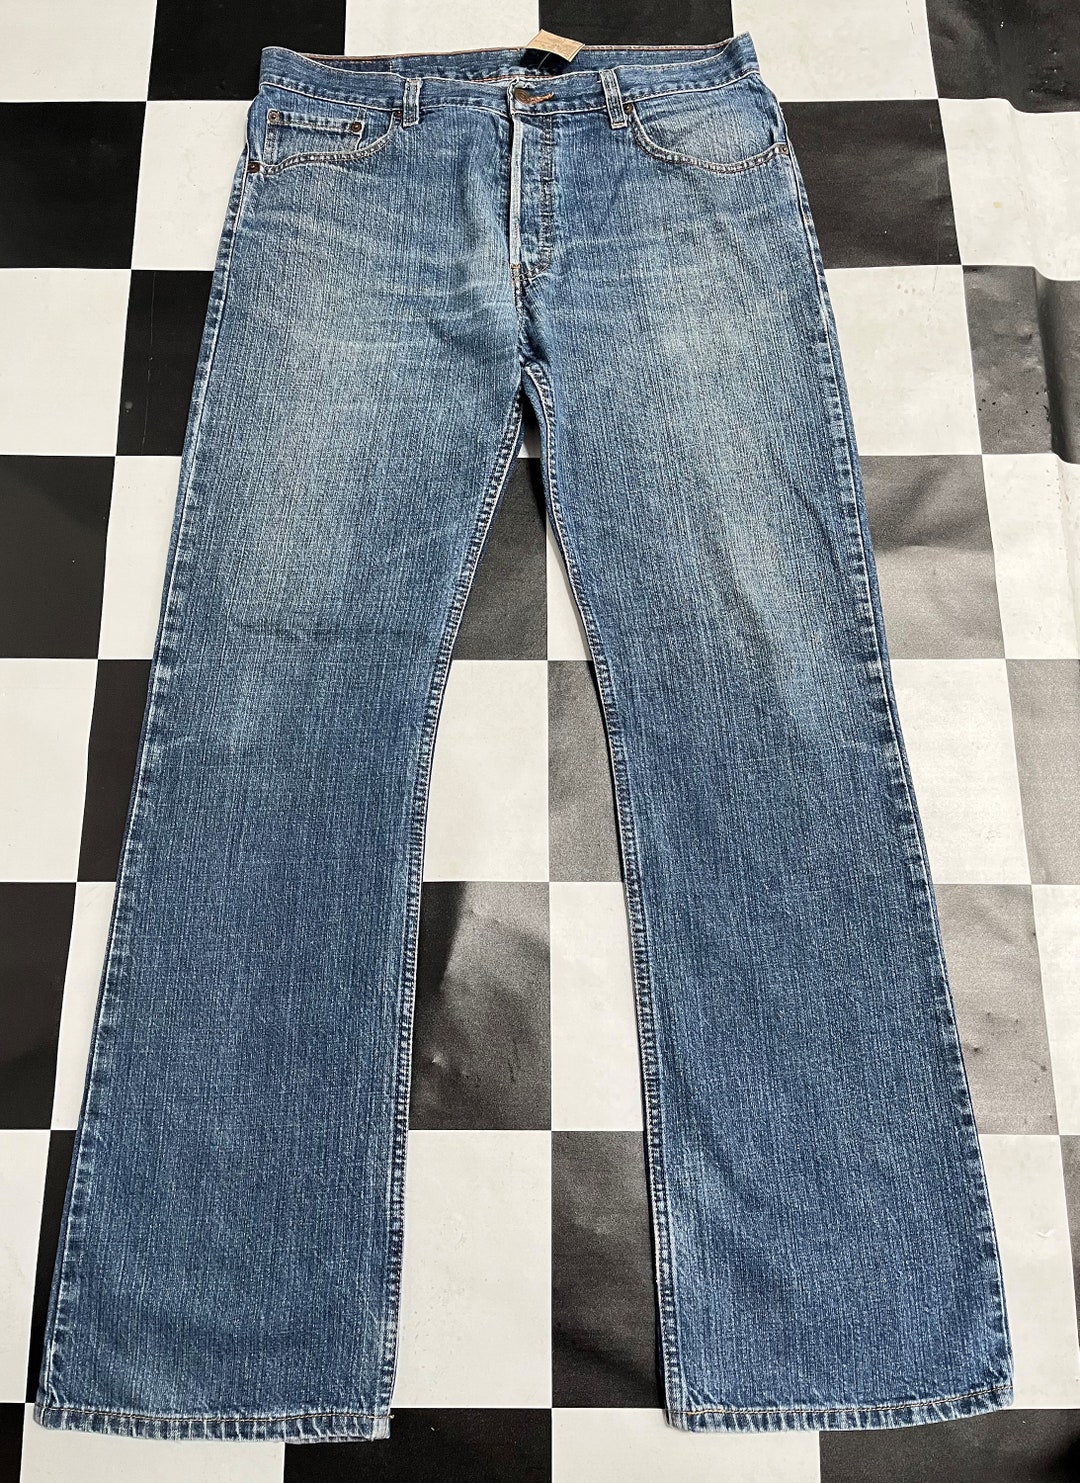 Vintage Levis 555 Jeansblue Wash Jeans Distressed Jeans - Etsy